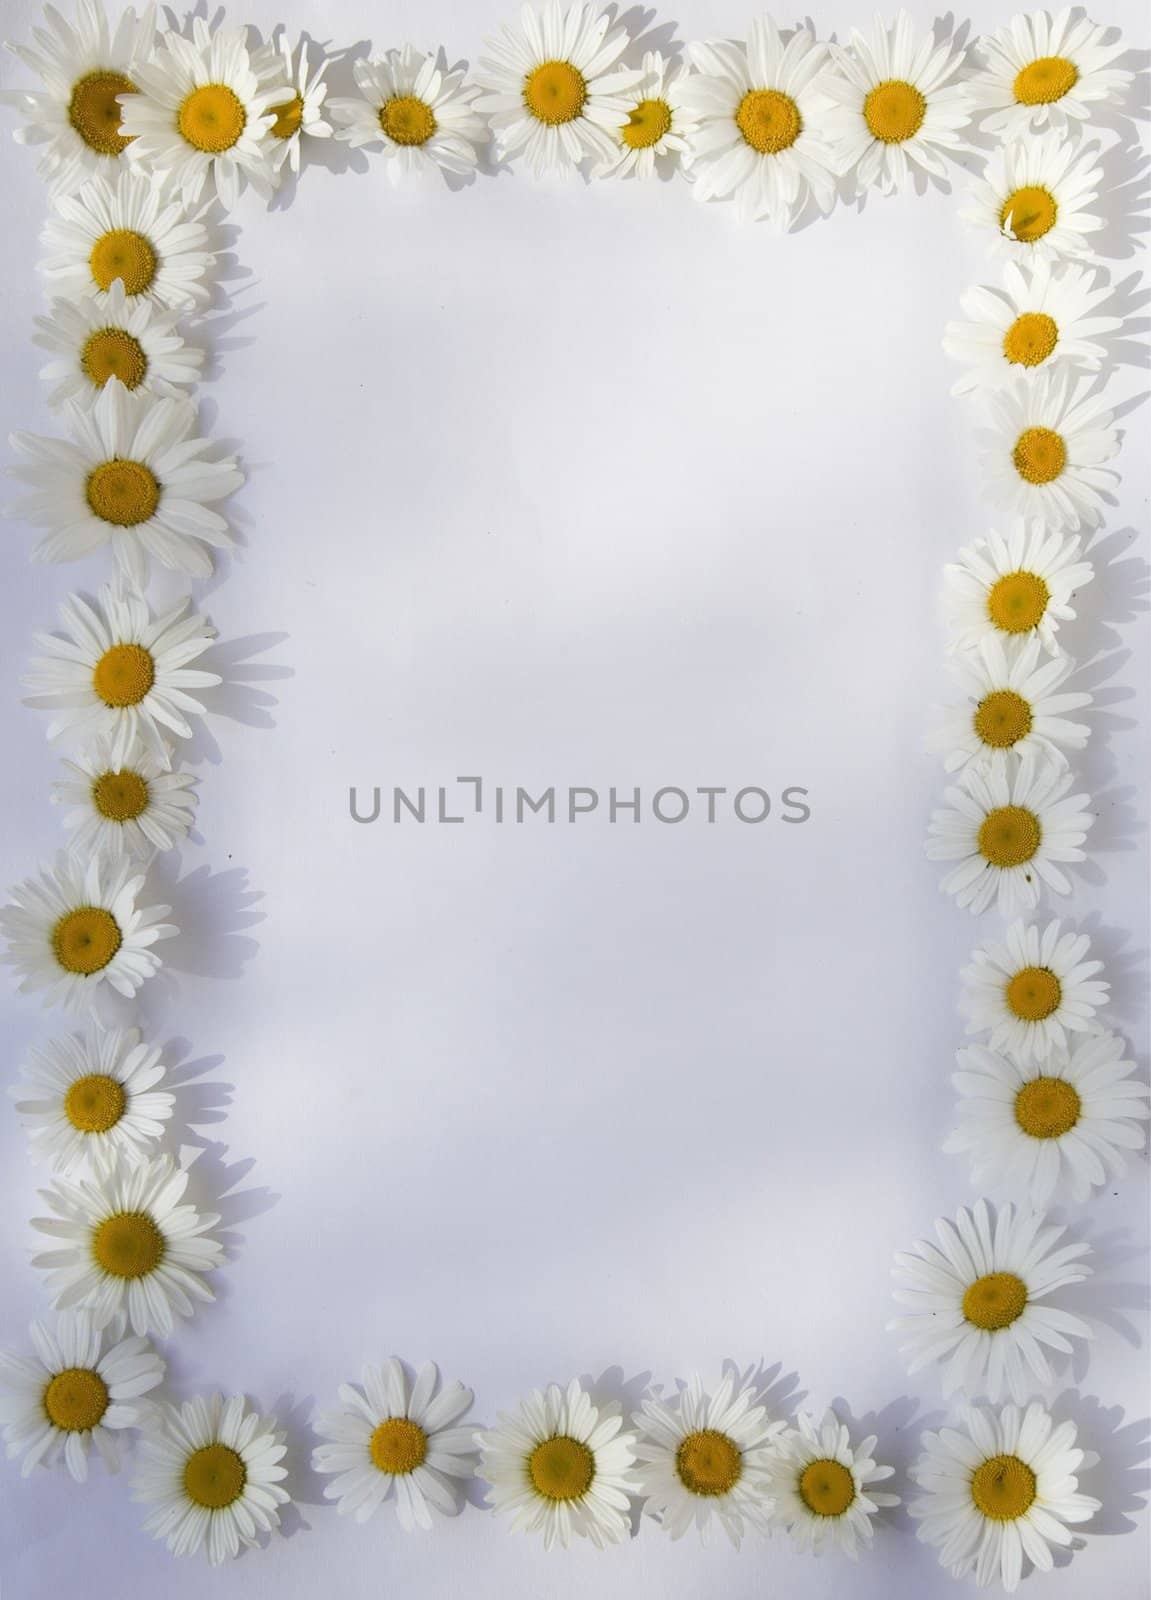 Daisy frame on light background